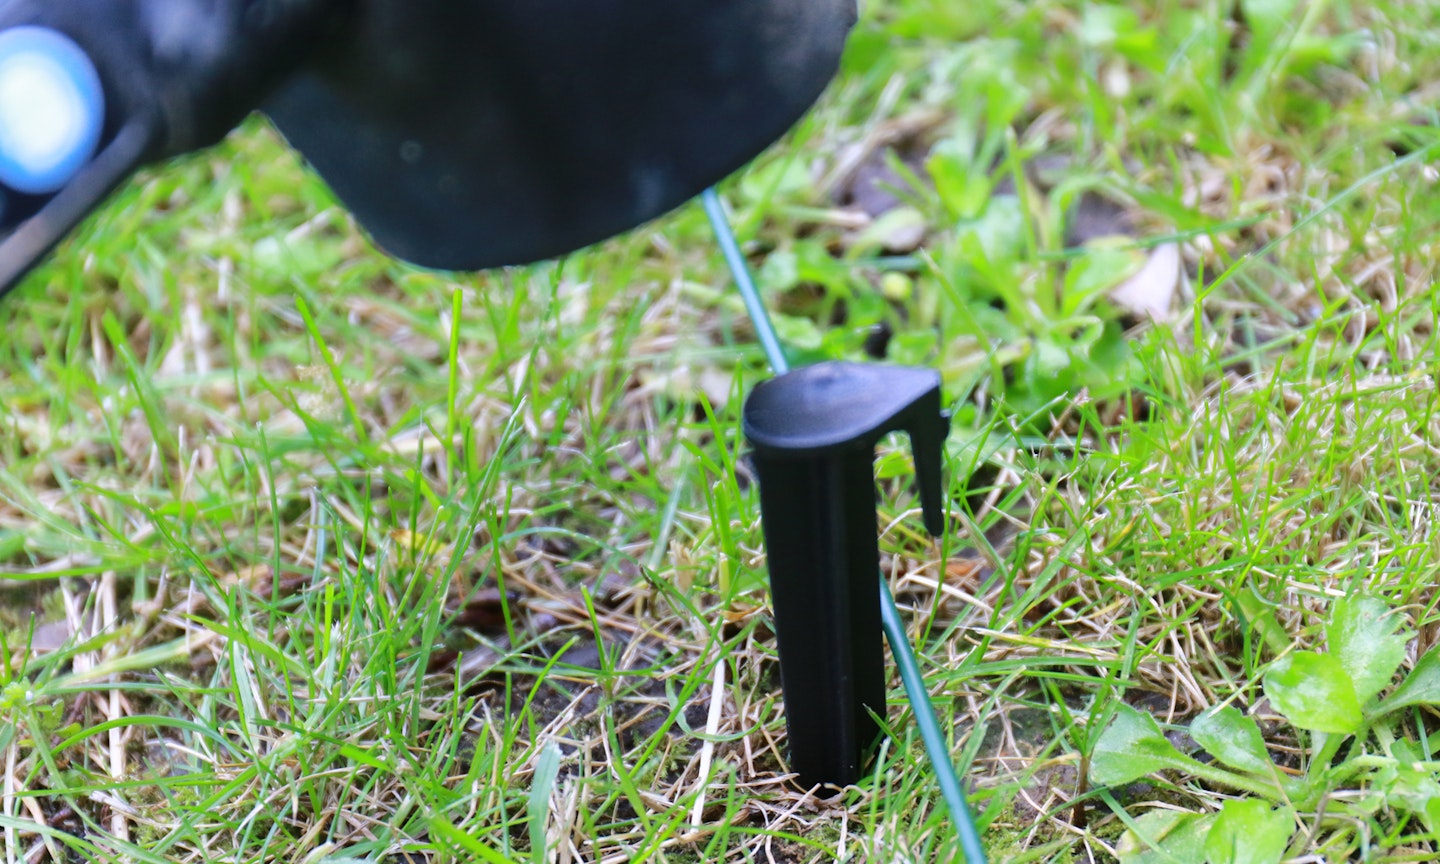 Worx Landroid M500 robotic lawnmower boundary wire